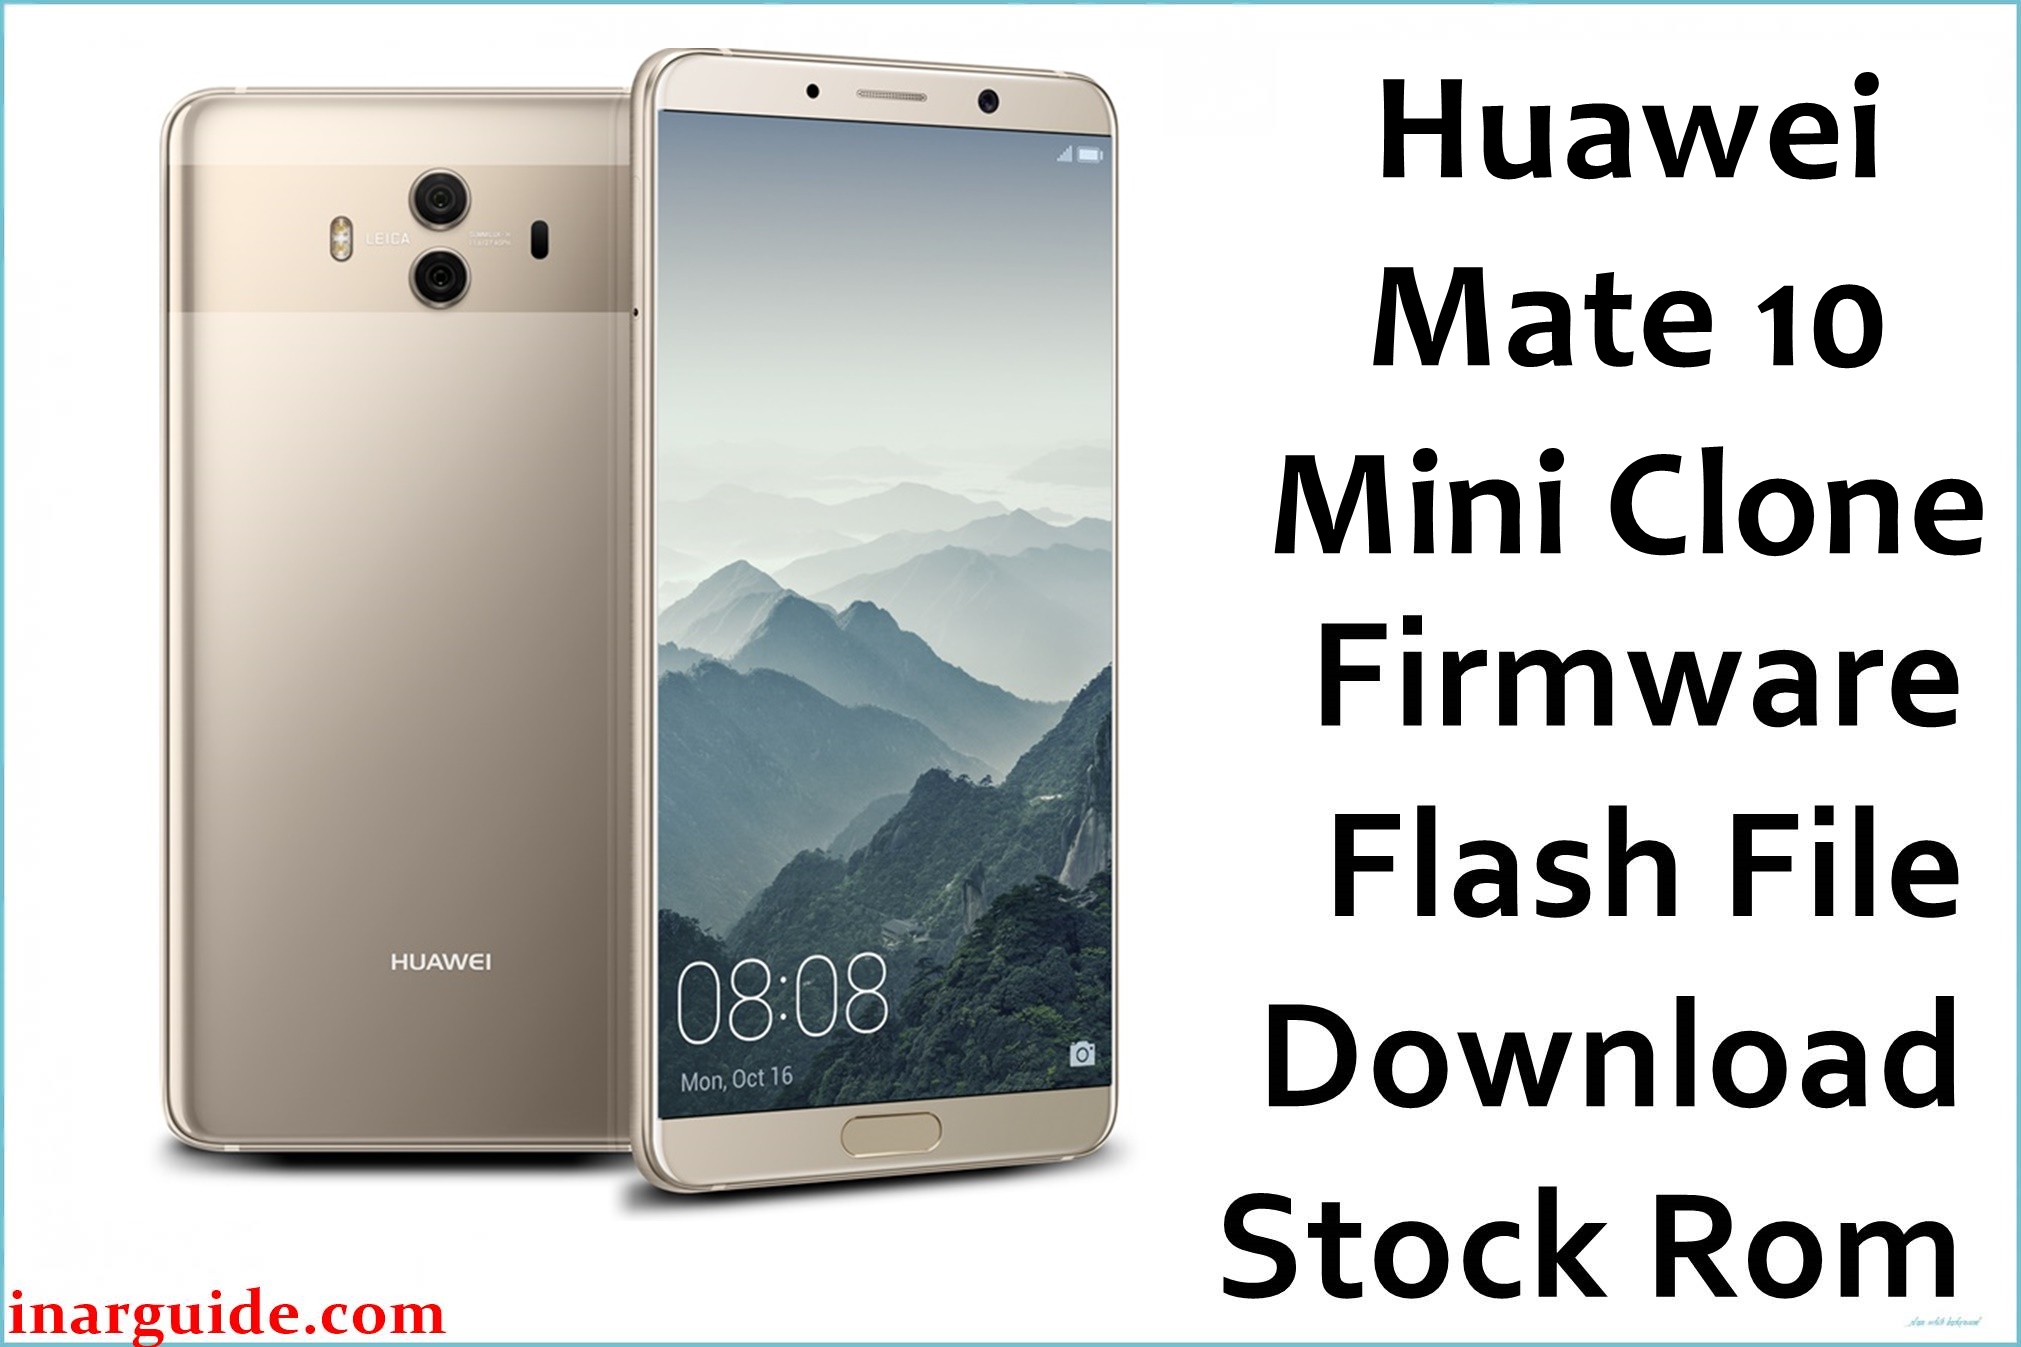 Huawei Mate 10 Mini Clone